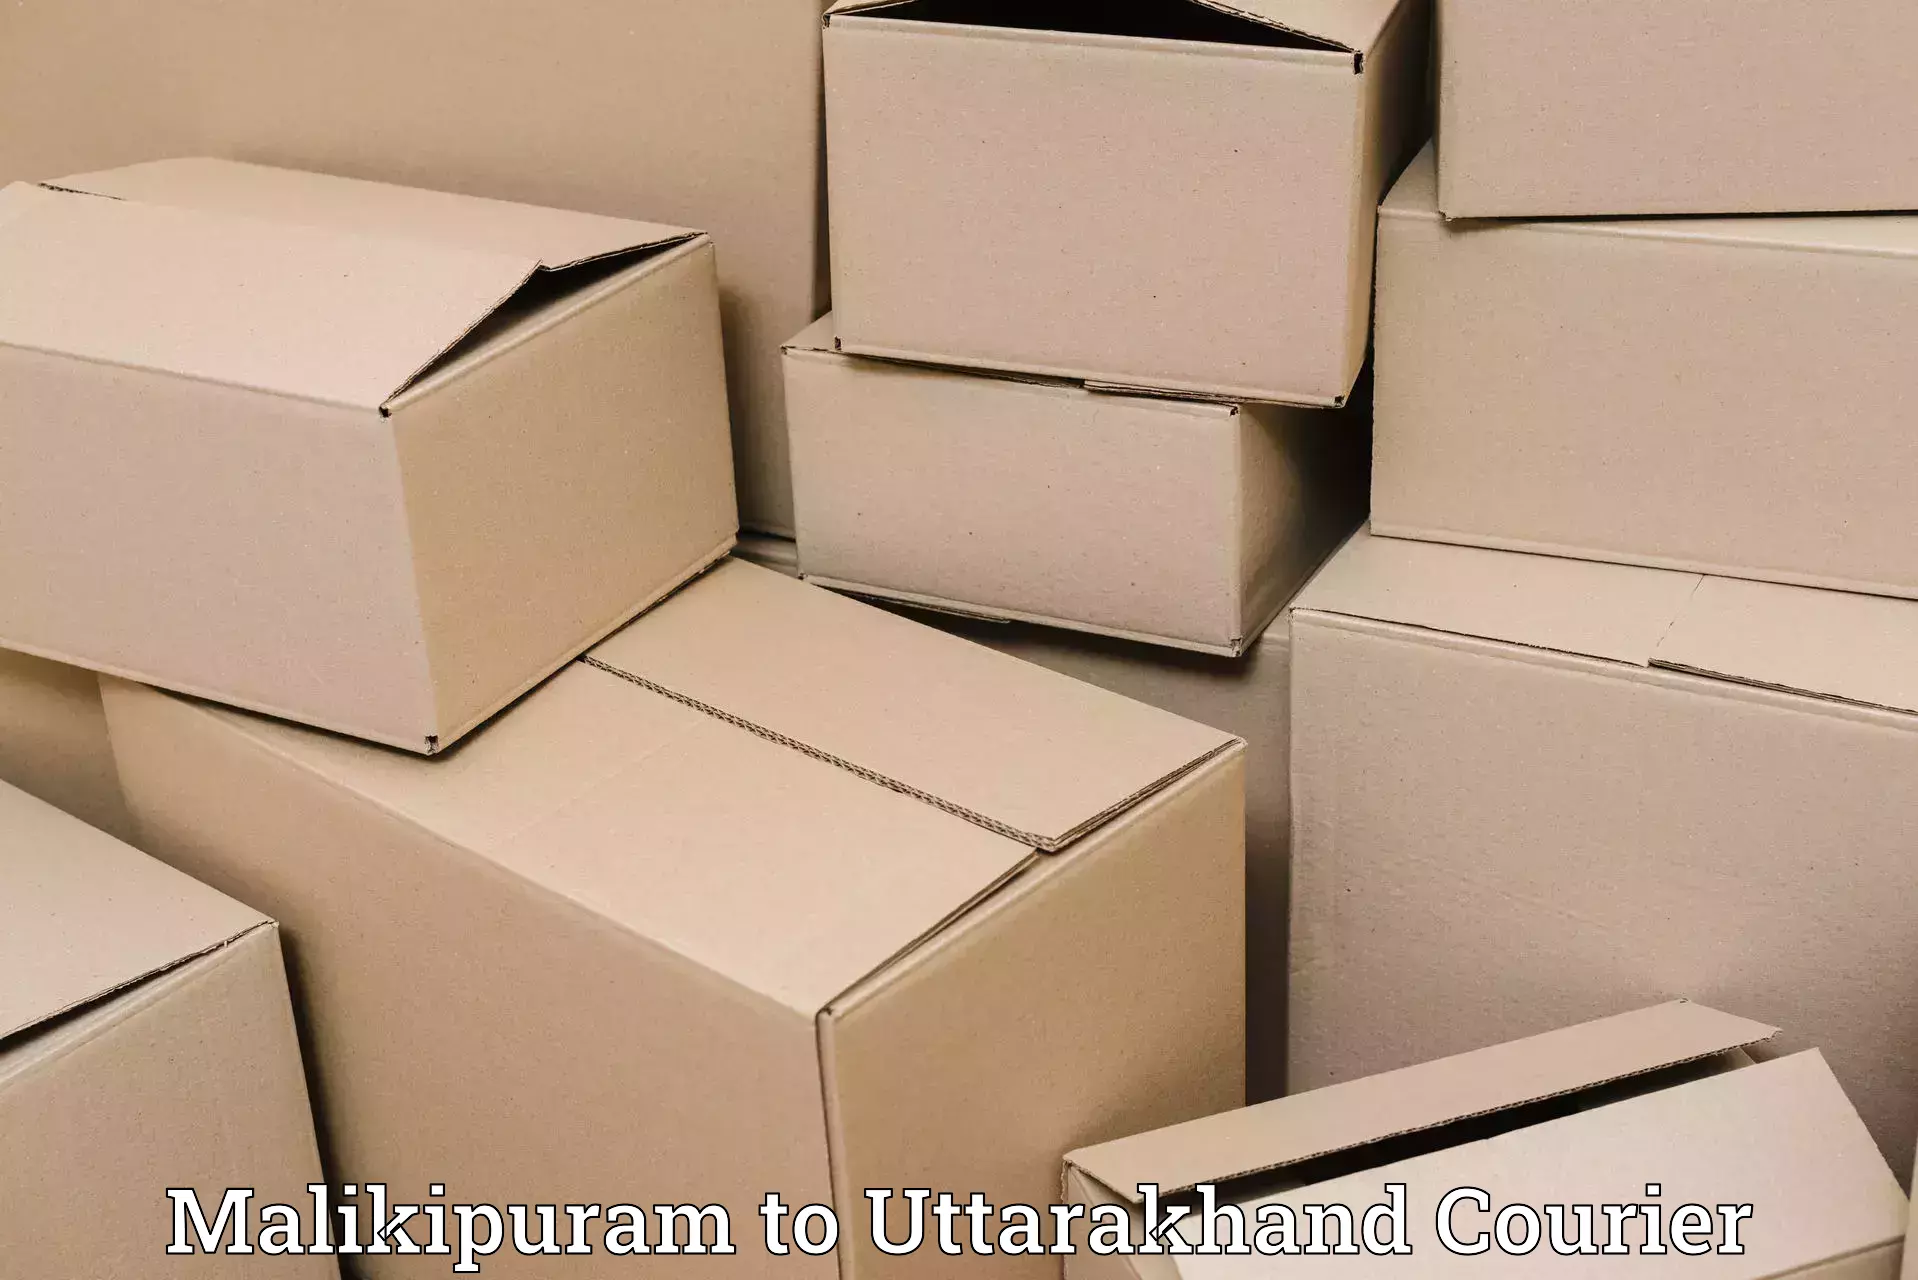 Automated shipping processes Malikipuram to Karnaprayag